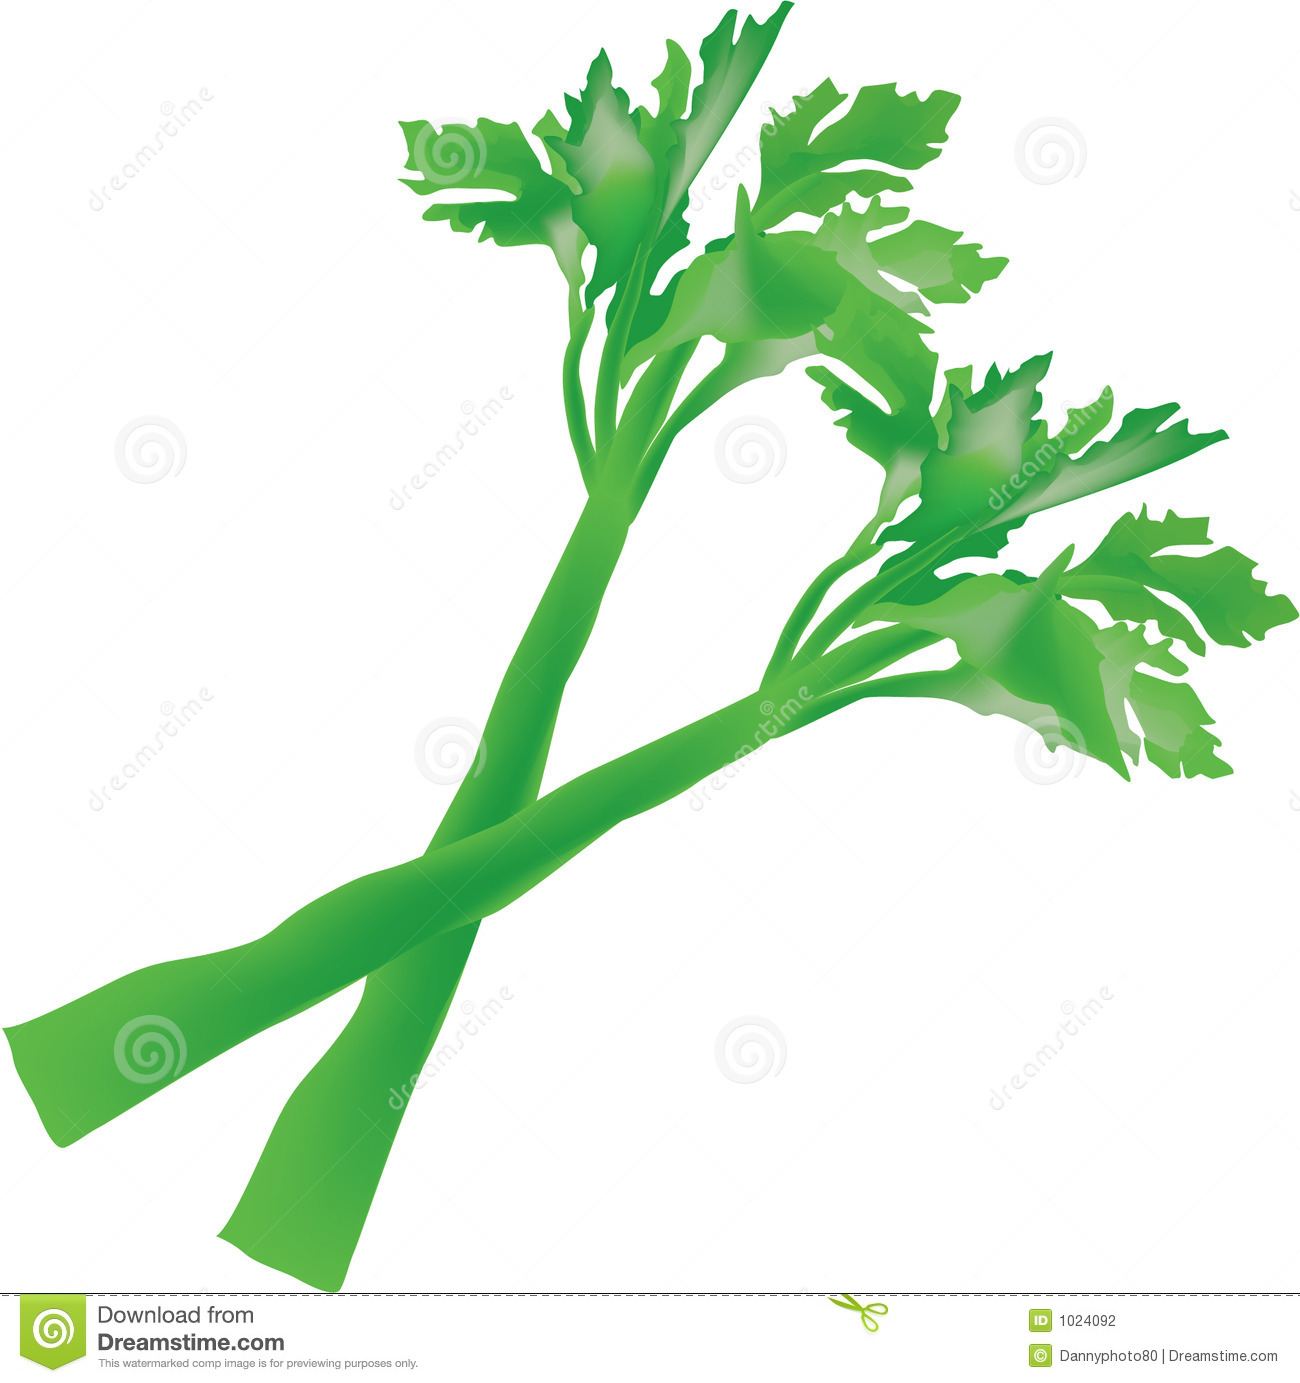 Illustration Of A Couple Of Sticks Of Celery